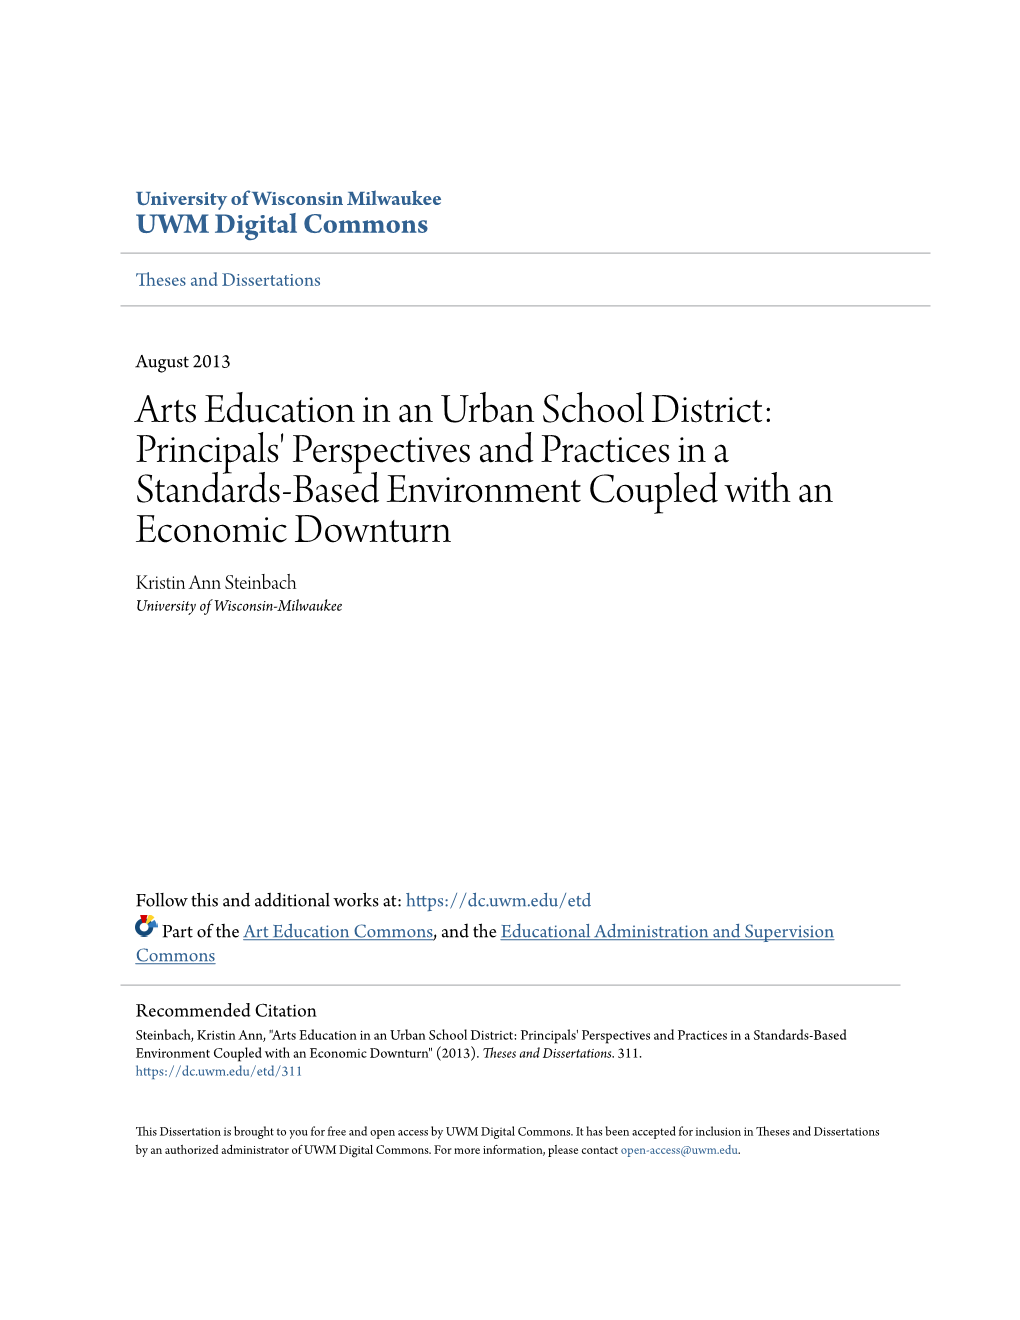 Arts Education in an Urban School District: Principals' Perspectives